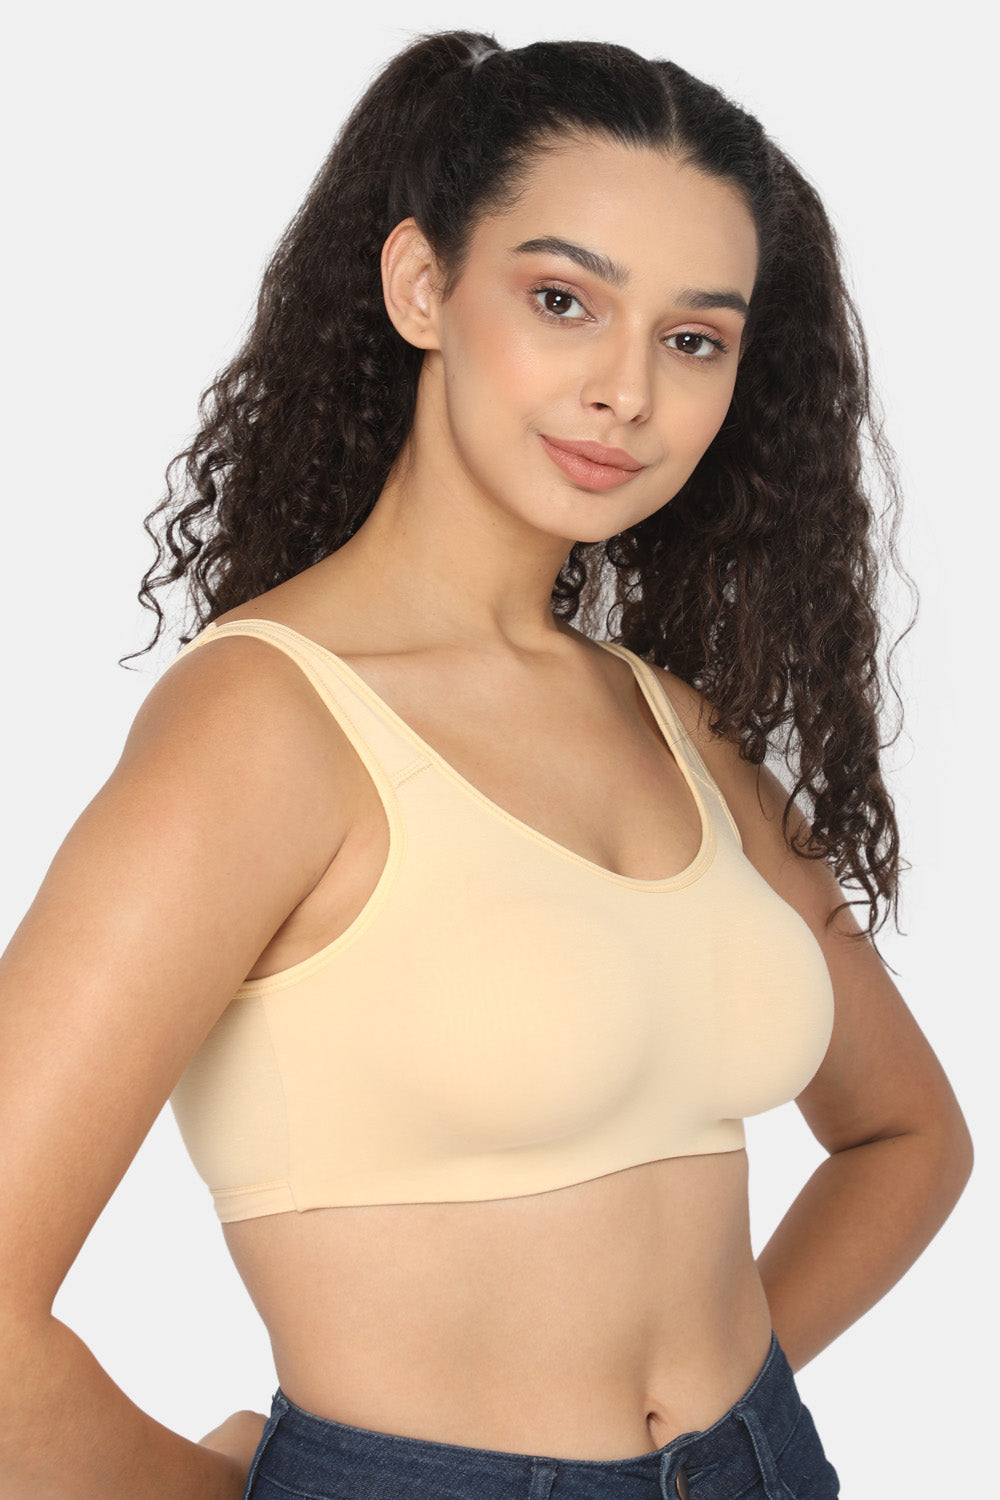 Myntra Sports bra and tight haul starting price range 604 rupees